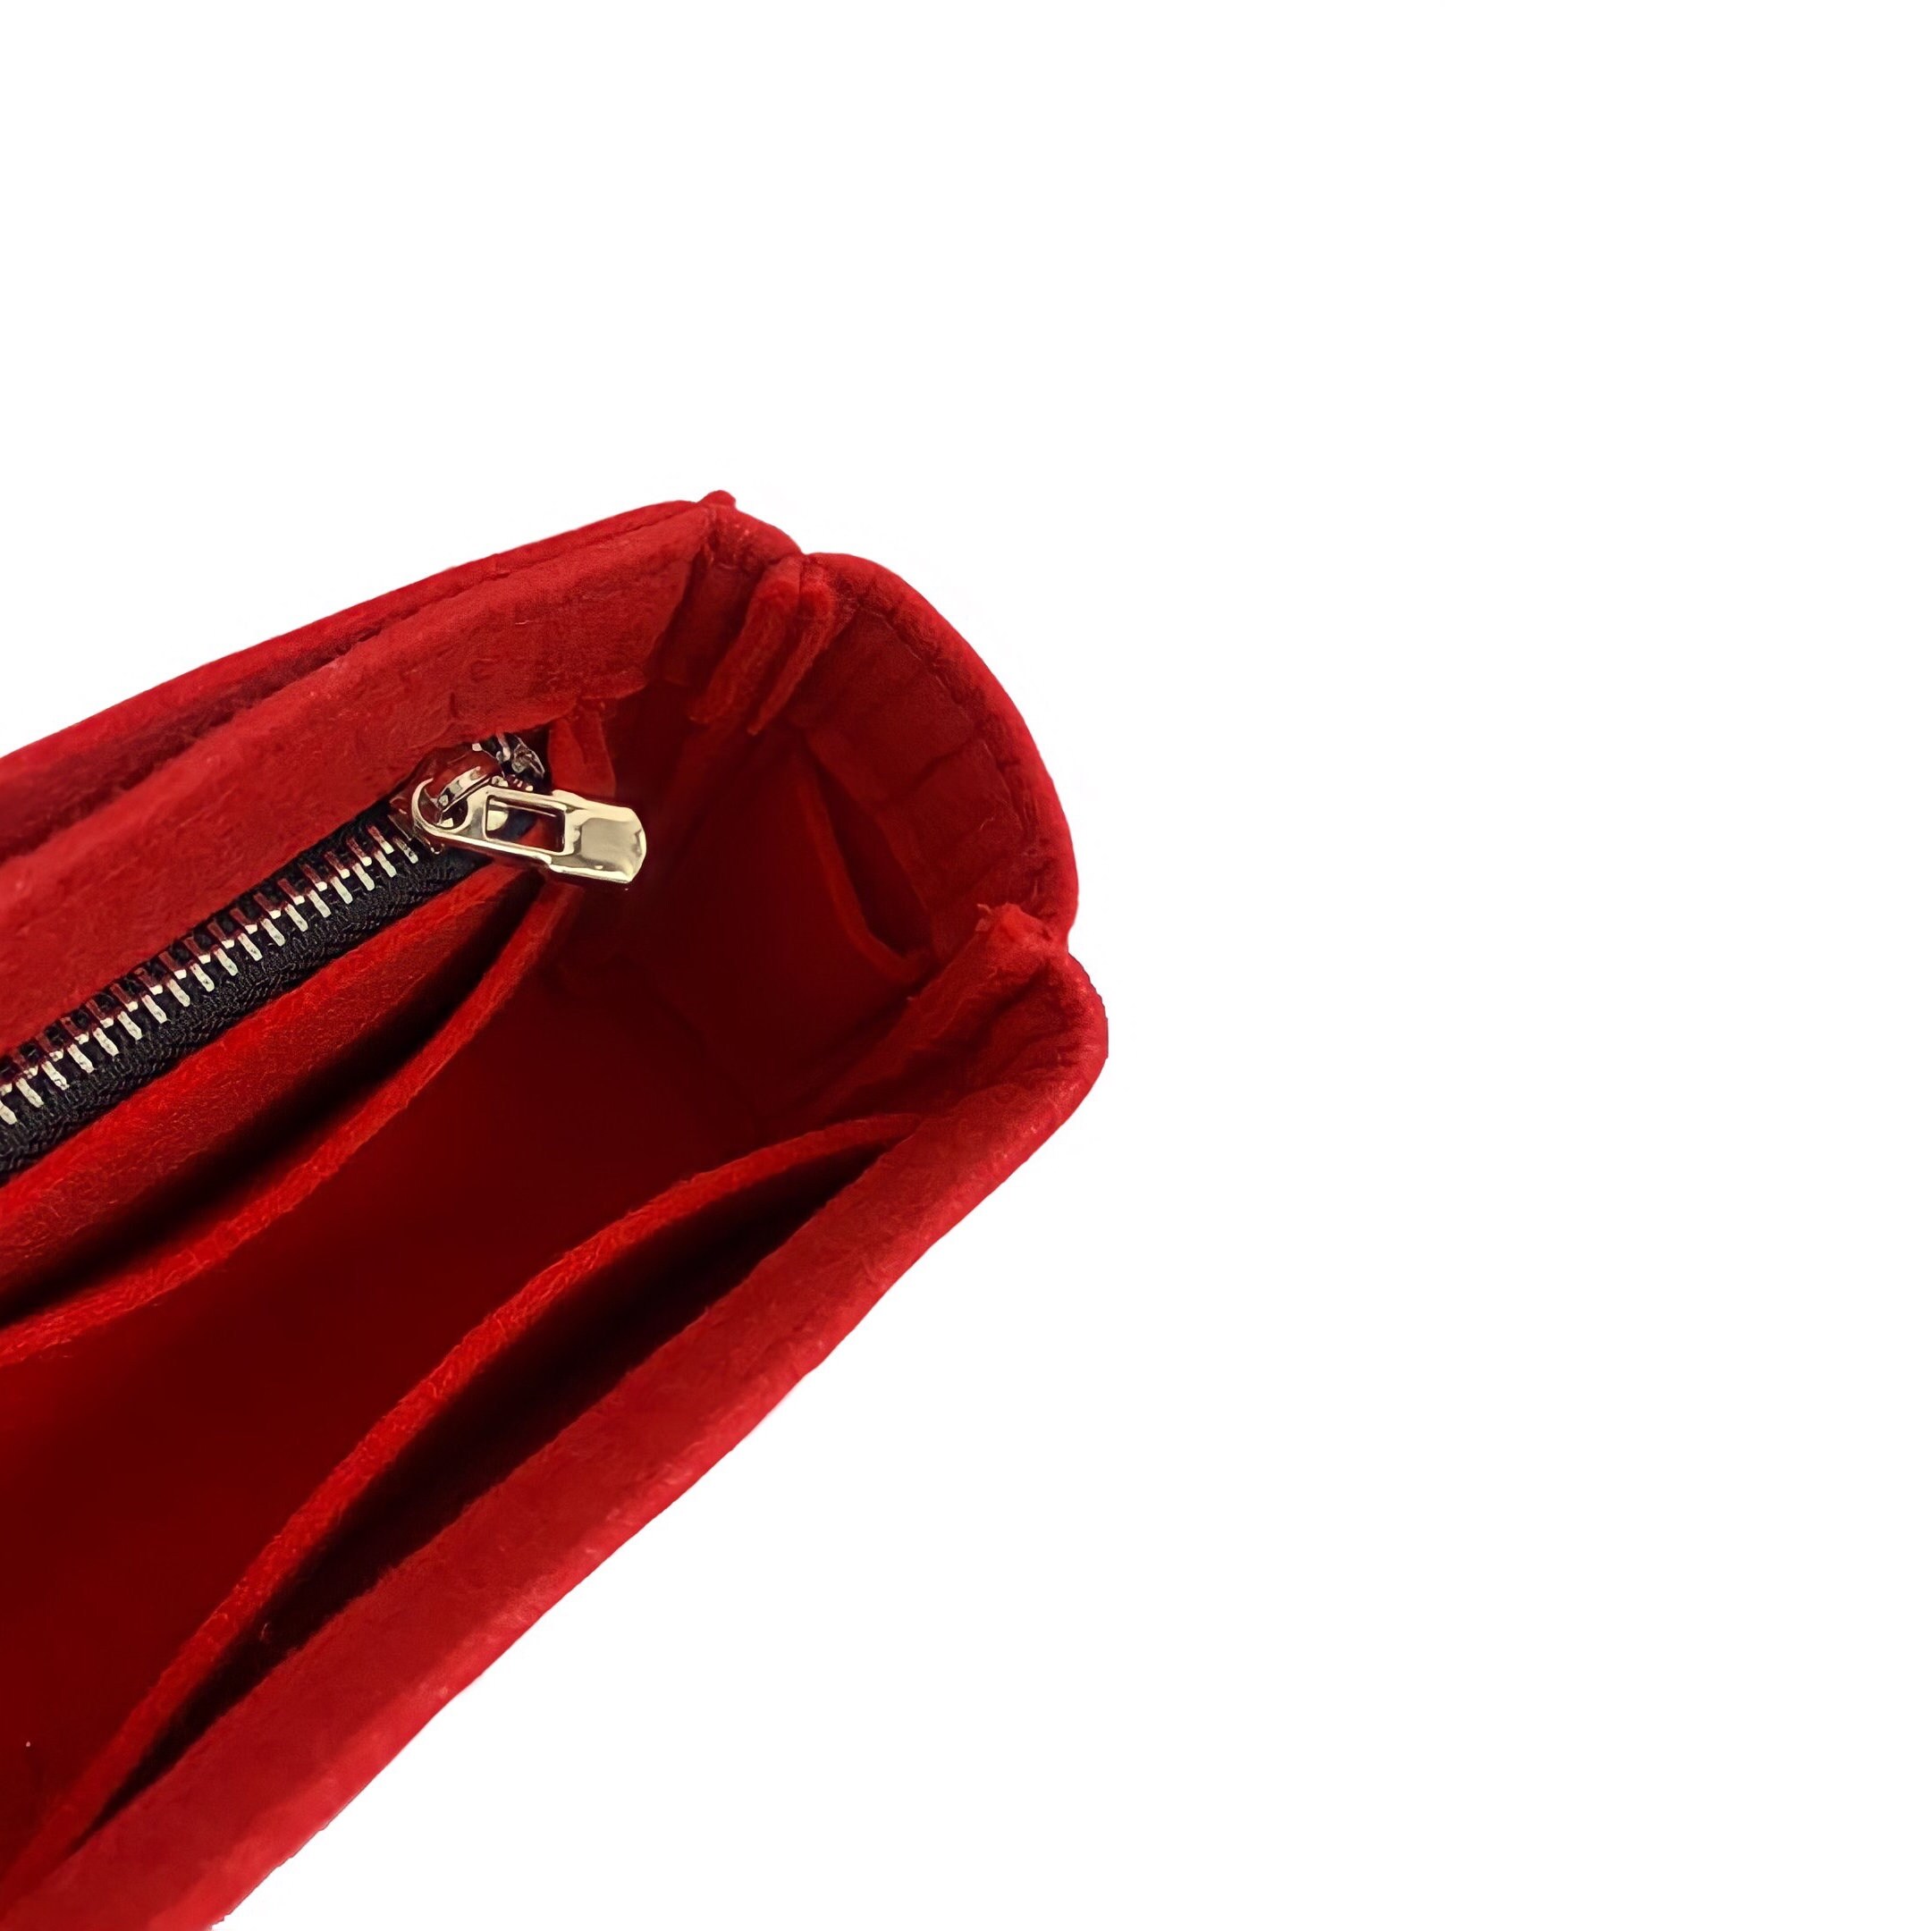 BV Loop Bag Organizer / Tote Felt Loop Bag Insert With Zipper -  UK